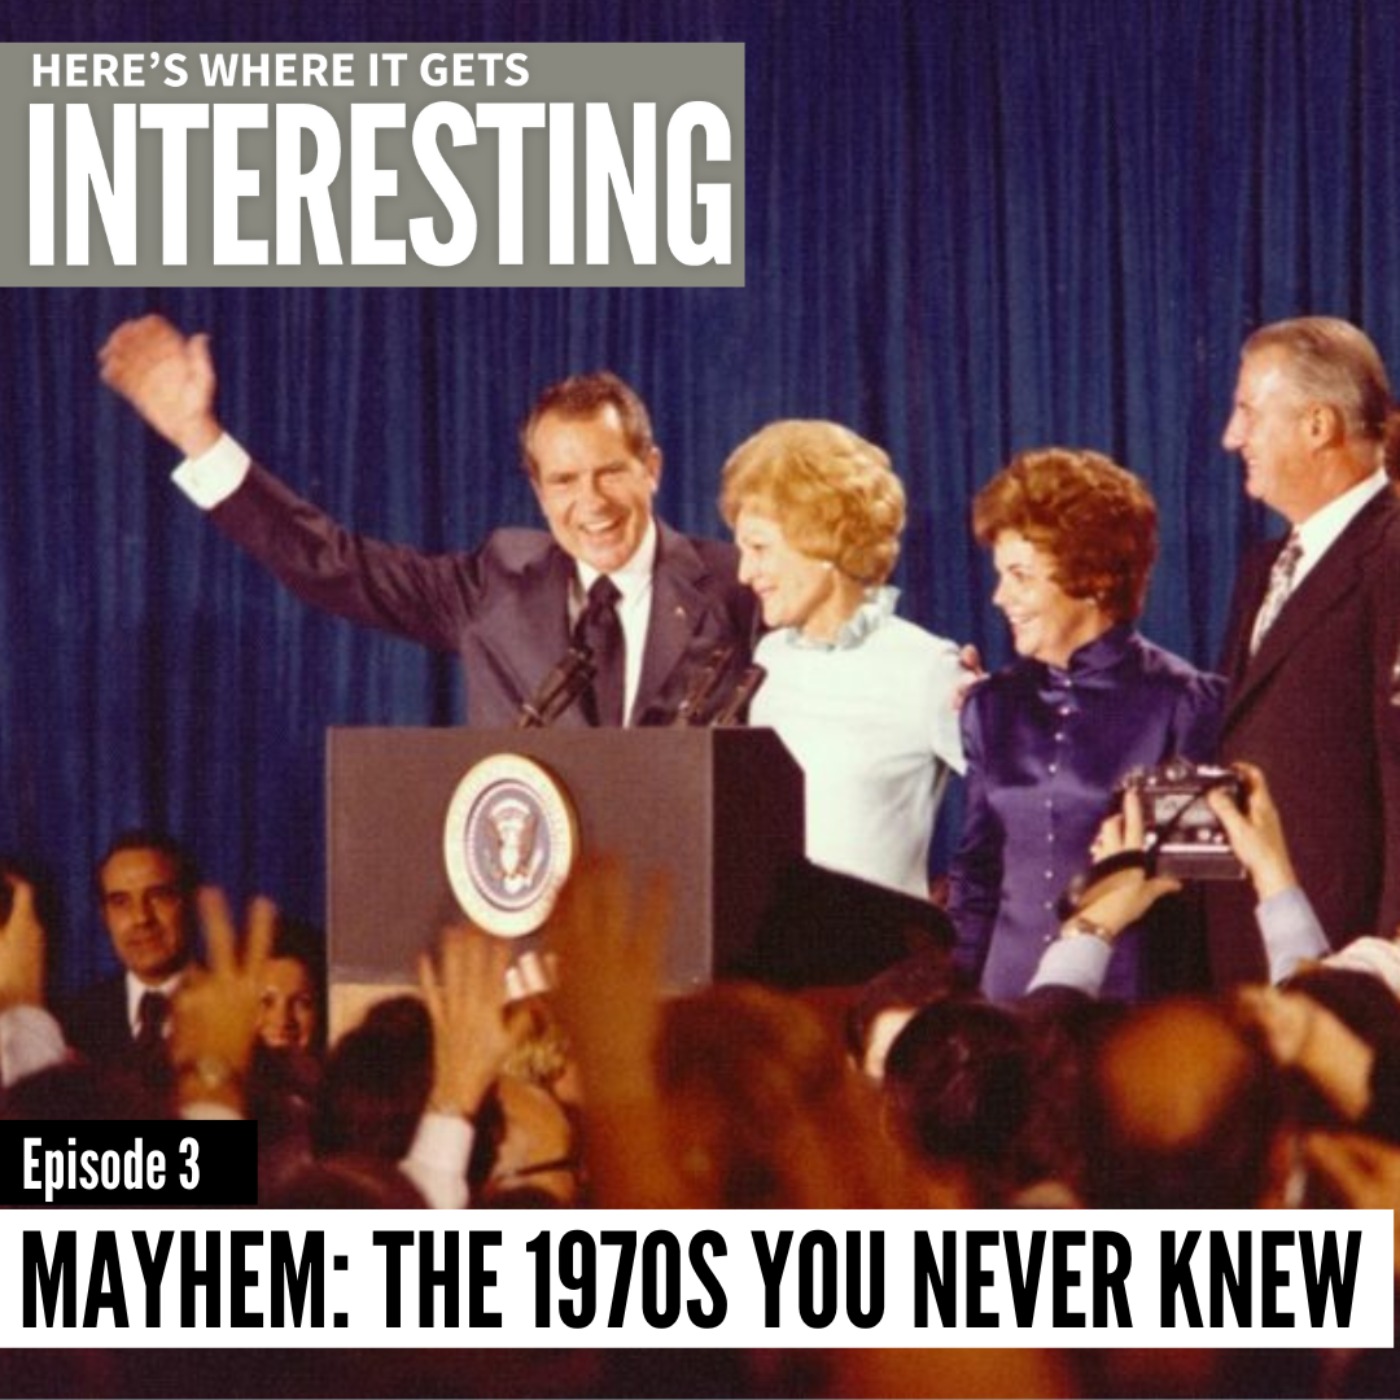 Mayhem: The 1970s You Never Knew, Episode 3